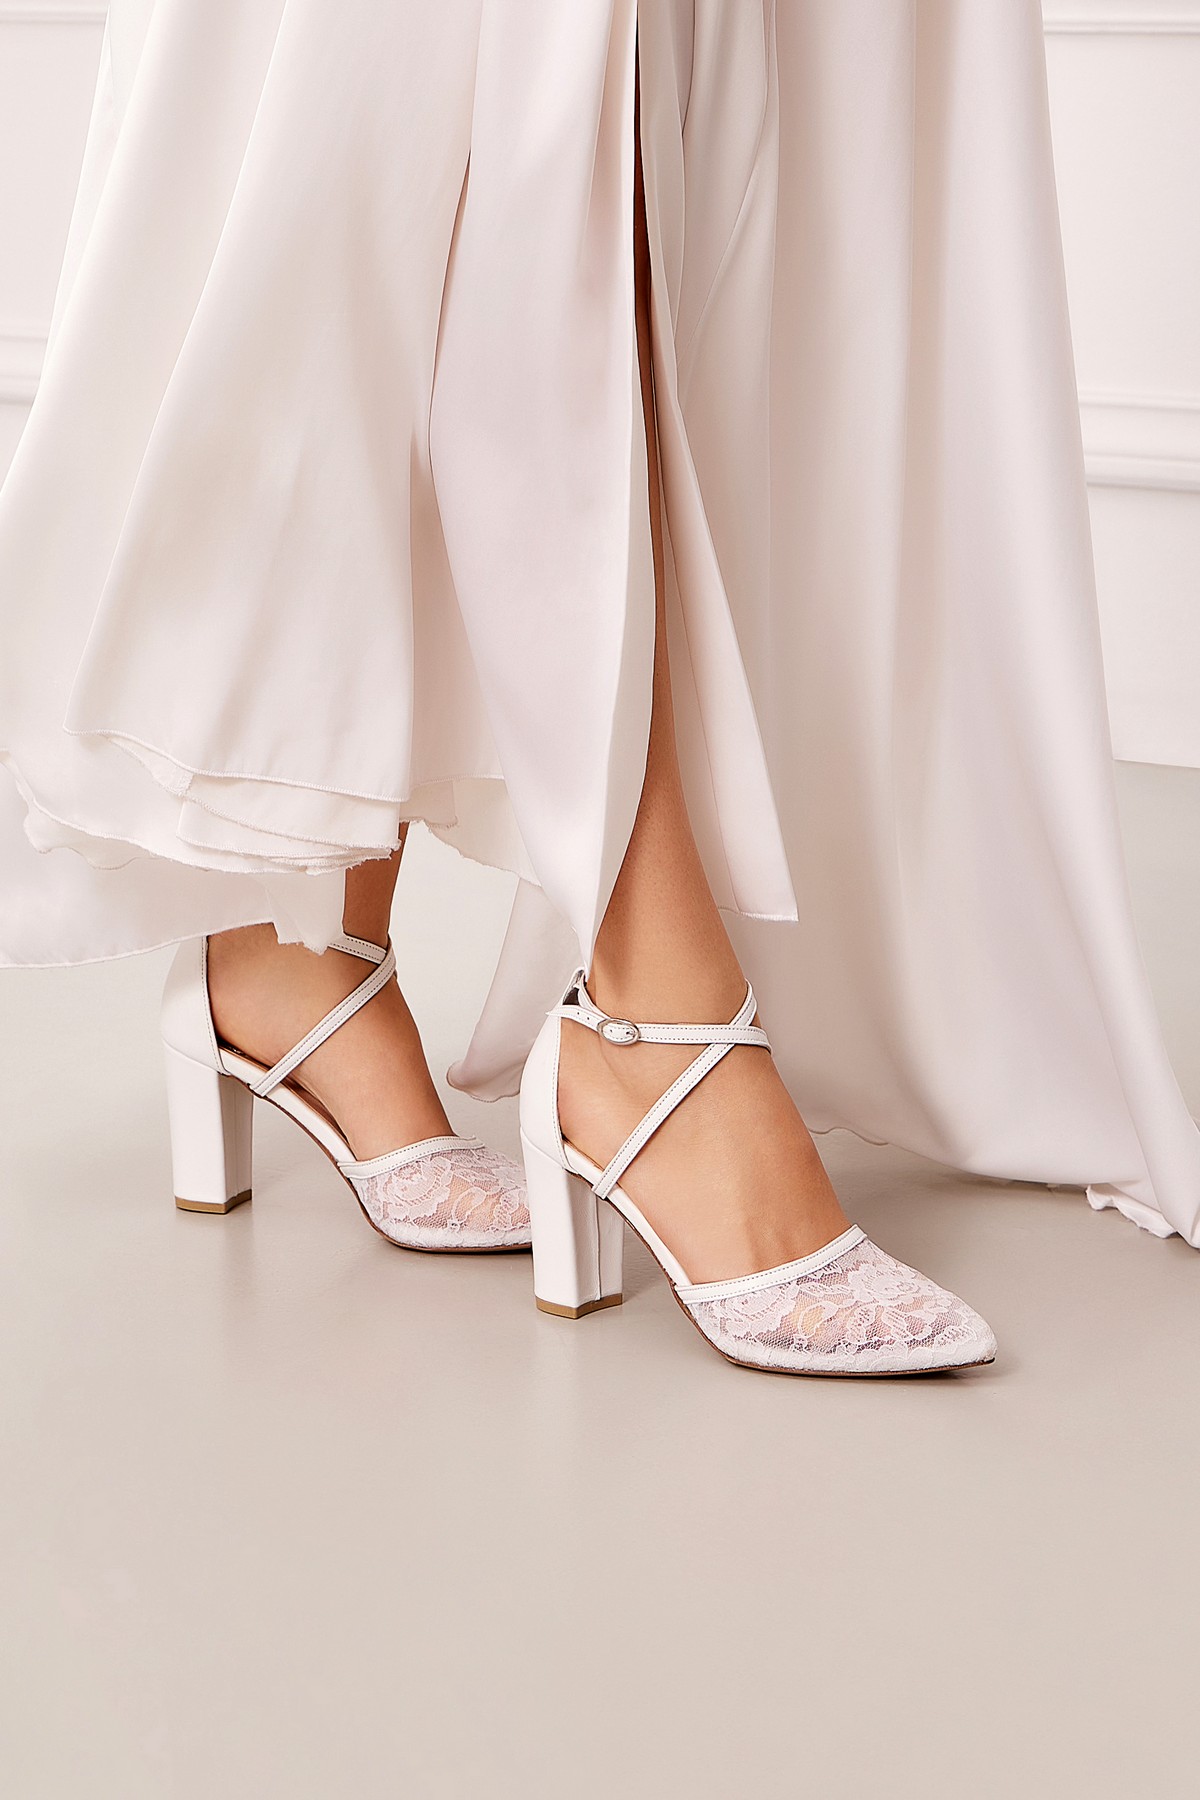 lace bridal shoes block heel